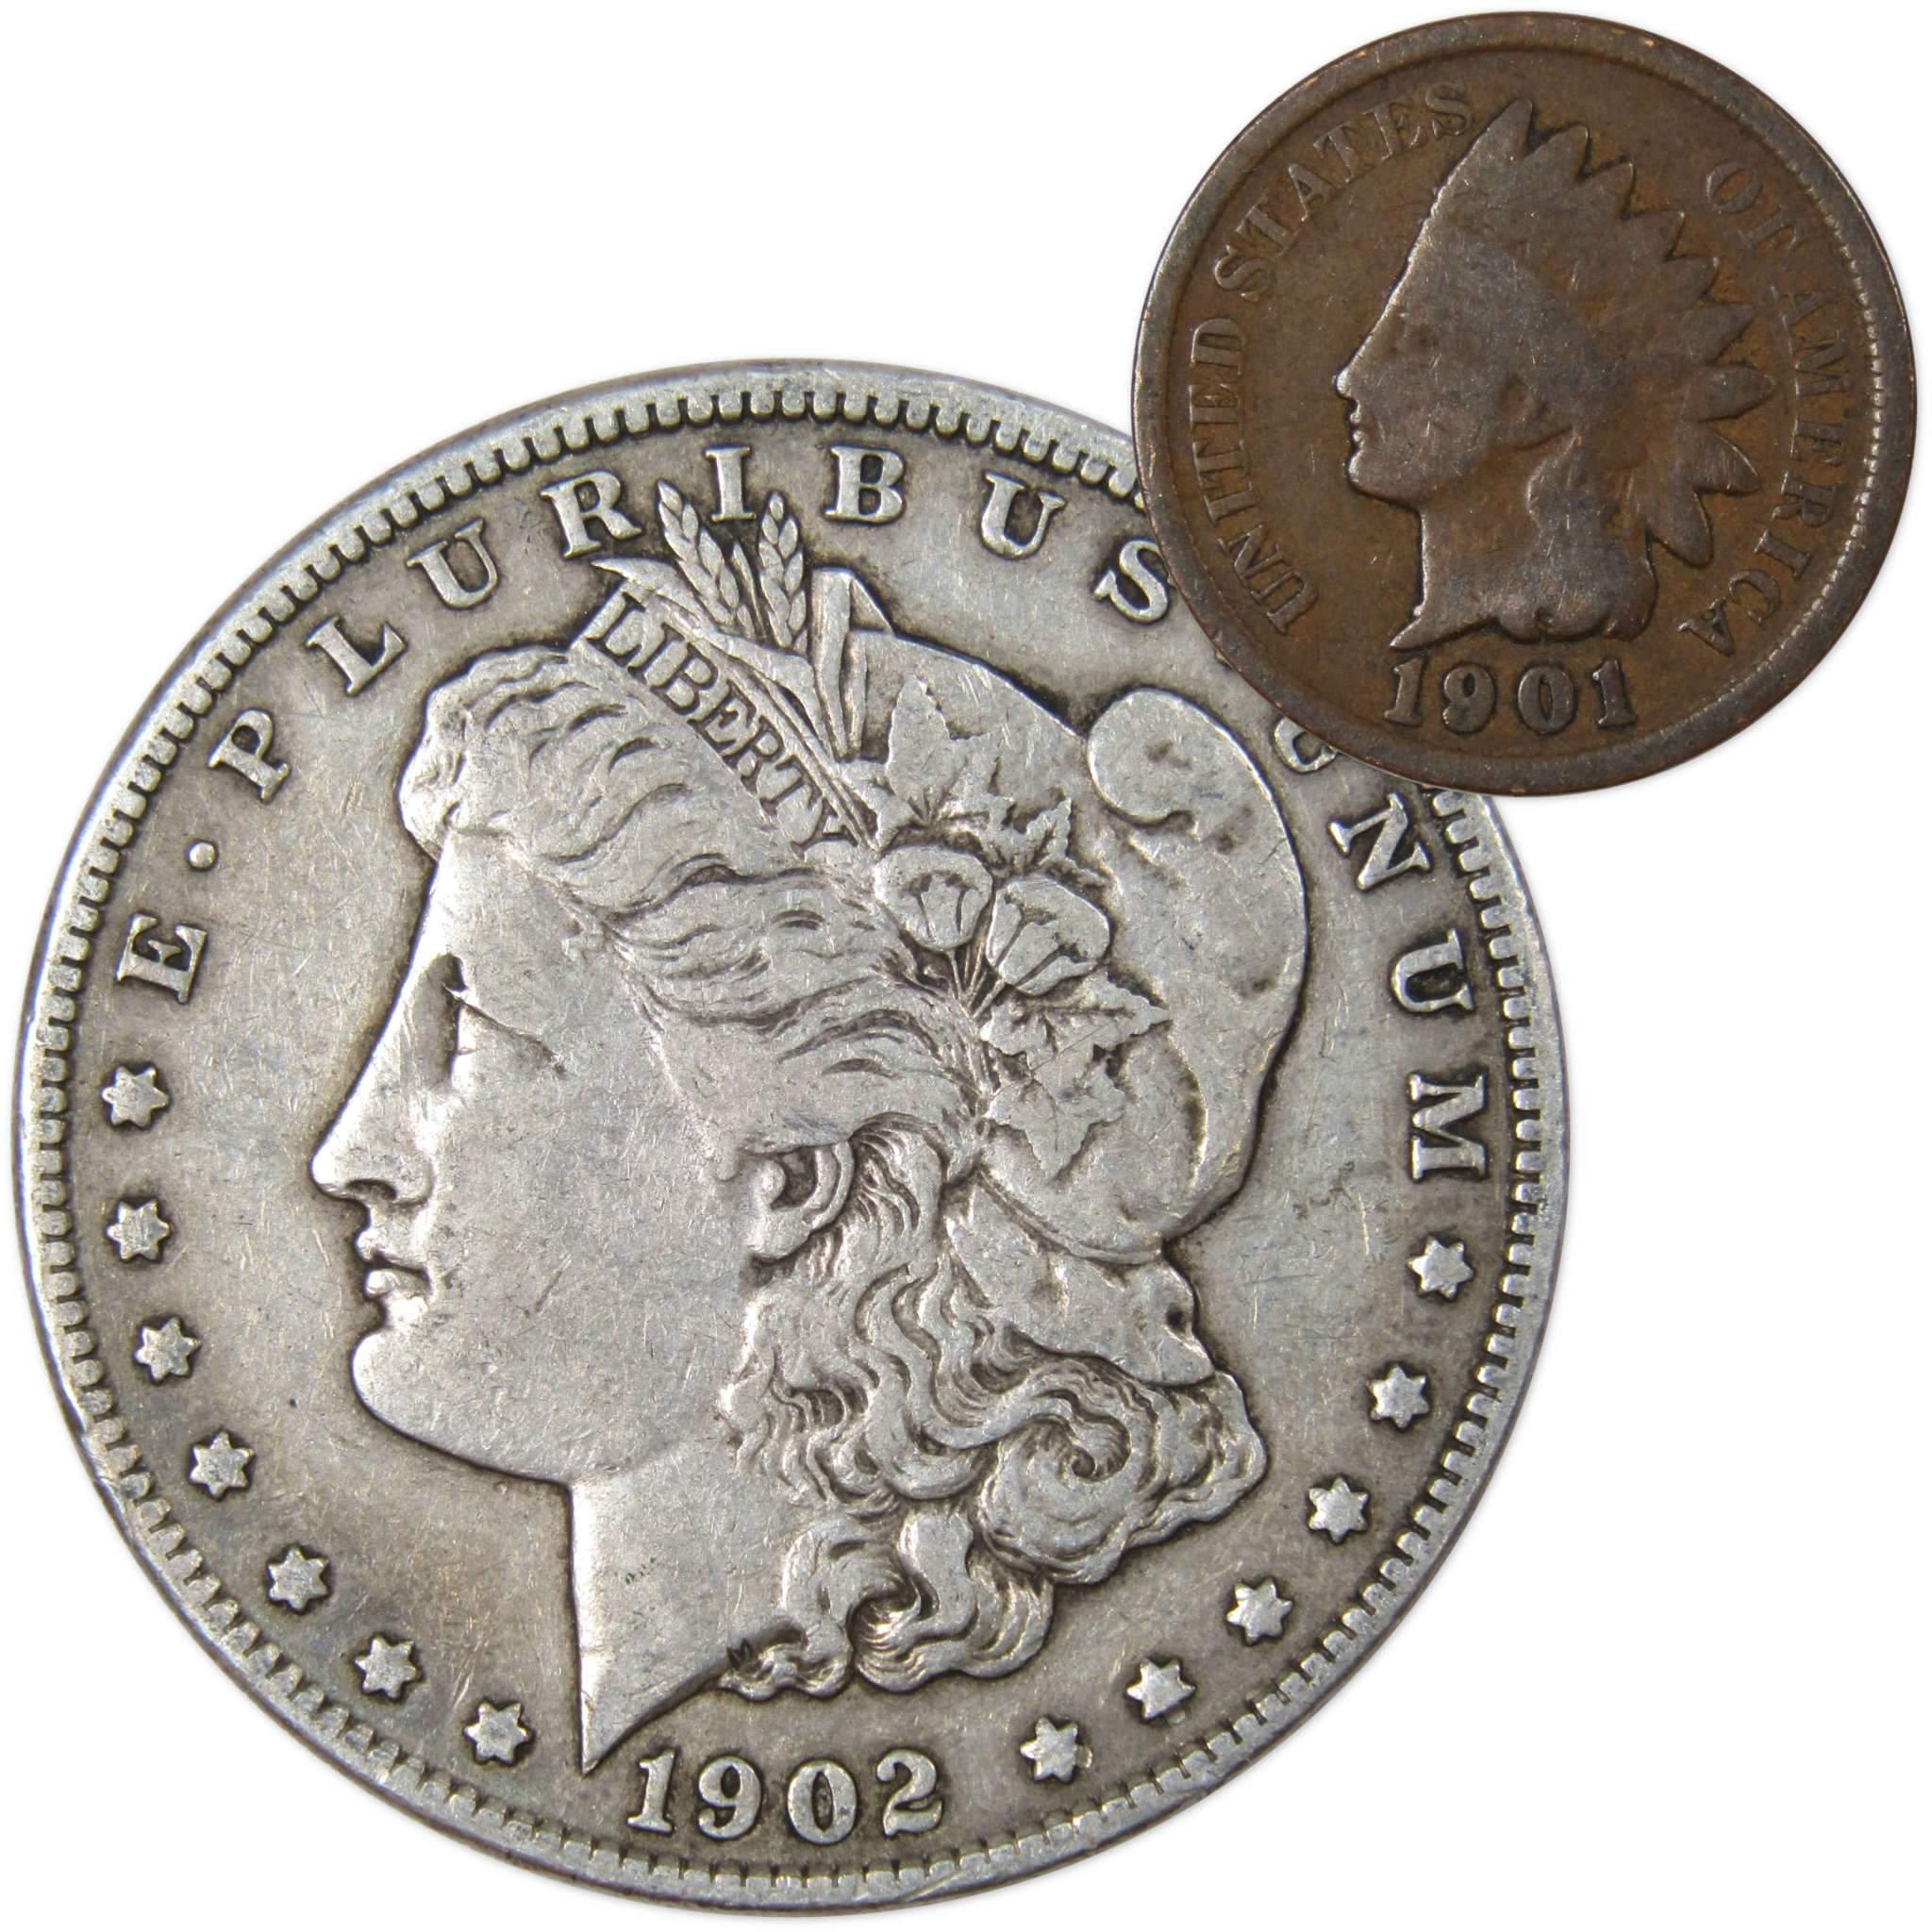 1902 O Morgan Dollar F Fine 90% Silver Coin with 1901 Indian Head Cent G Good - Morgan coin - Morgan silver dollar - Morgan silver dollar for sale - Profile Coins &amp; Collectibles